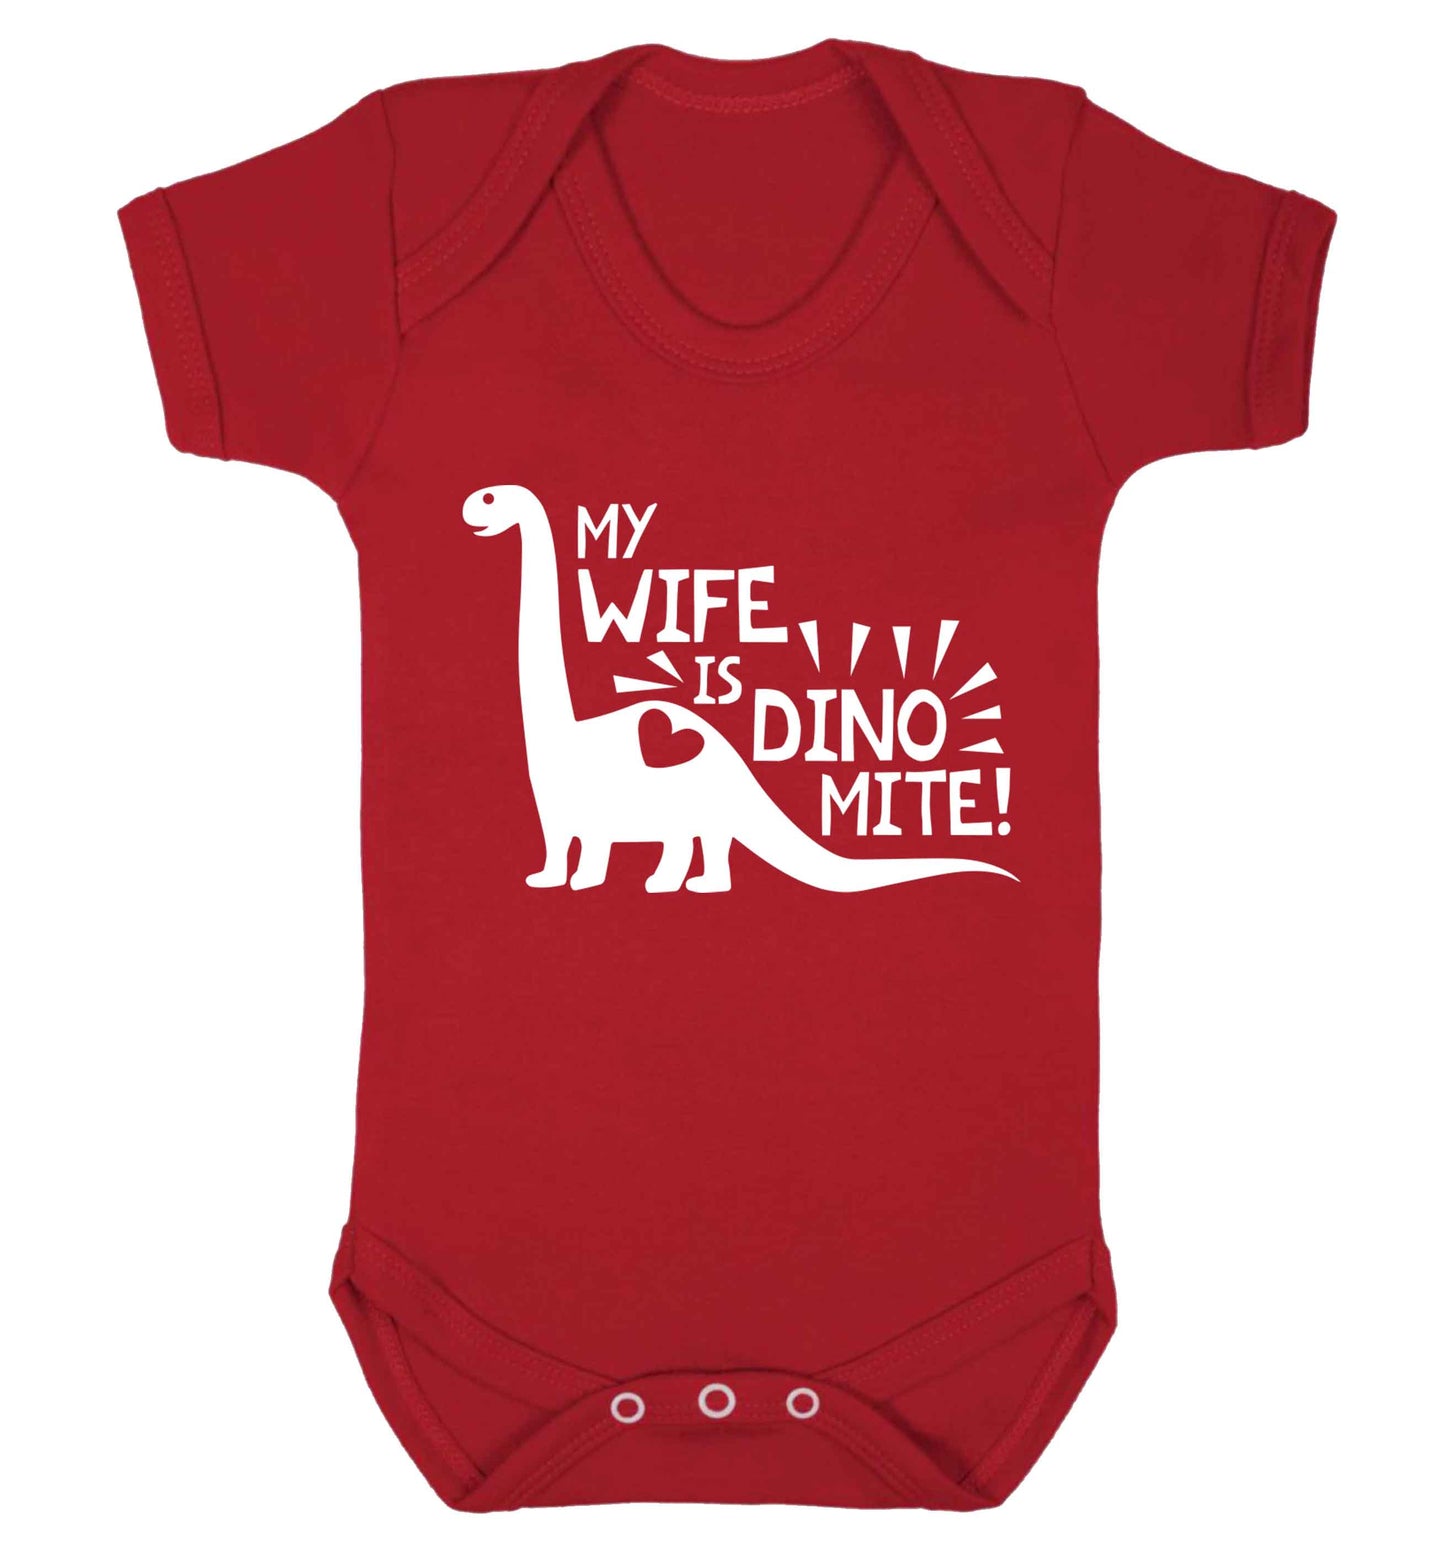 My wife is dinomite! Baby Vest red 18-24 months